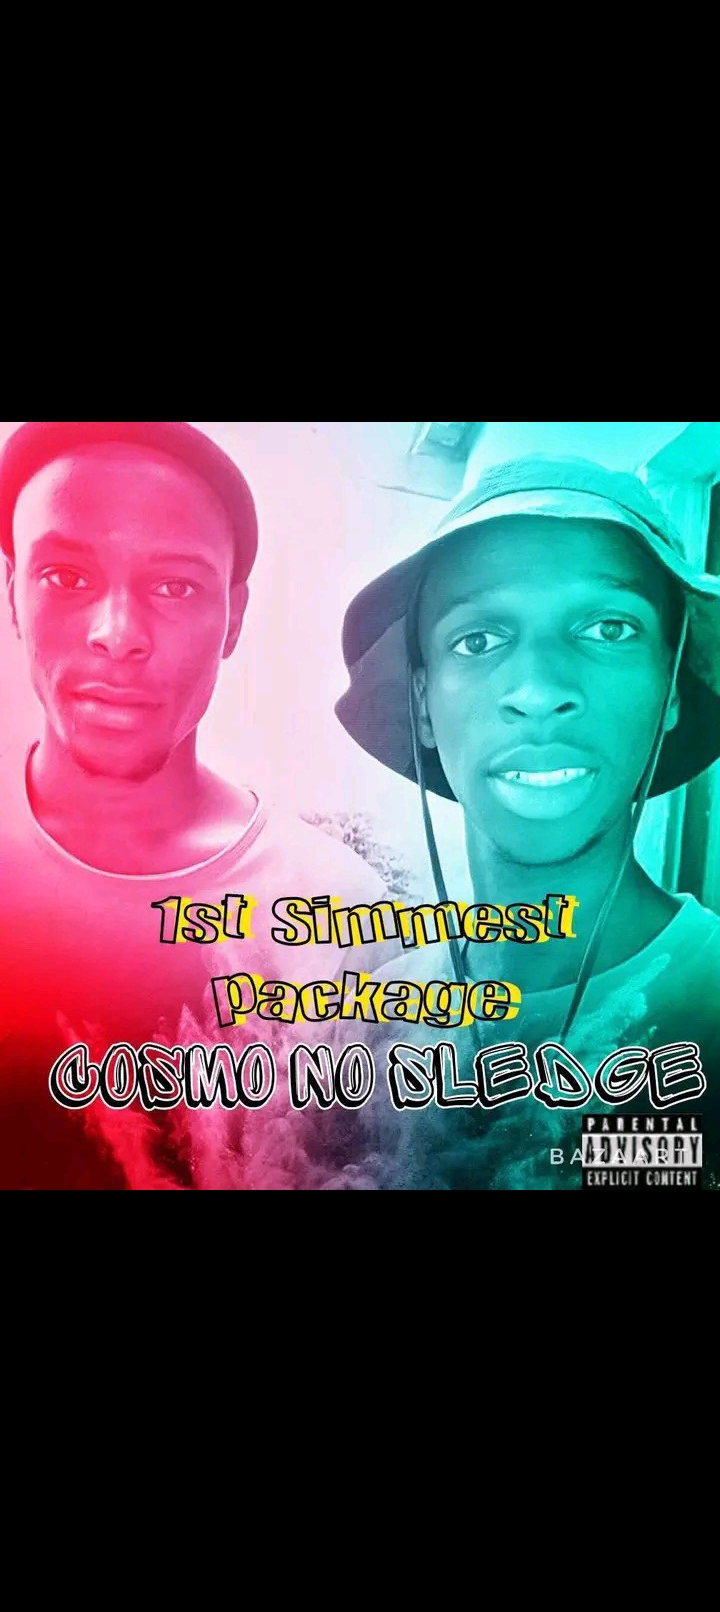 1. 1st Simmest - Cosmo no Sledge